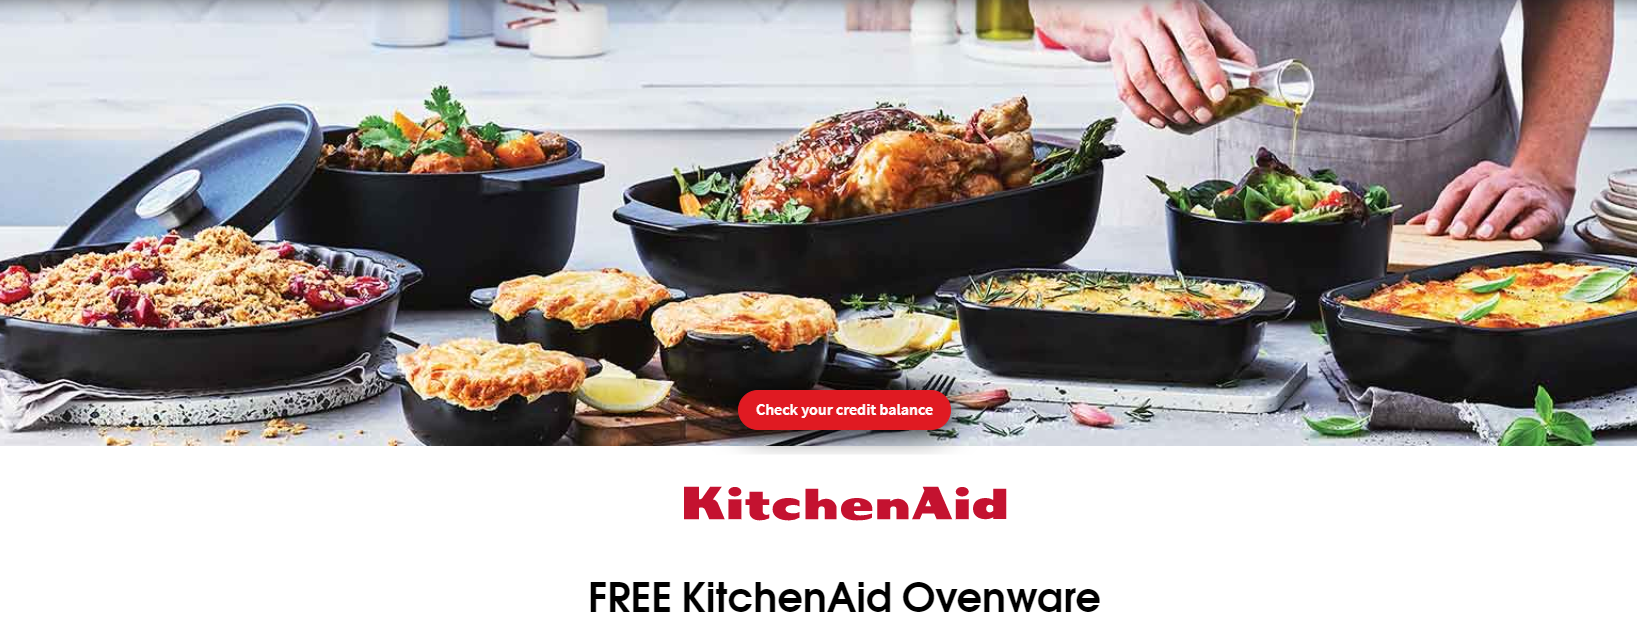 Coles FREE KitchenAid Ovenware when you redeem credits